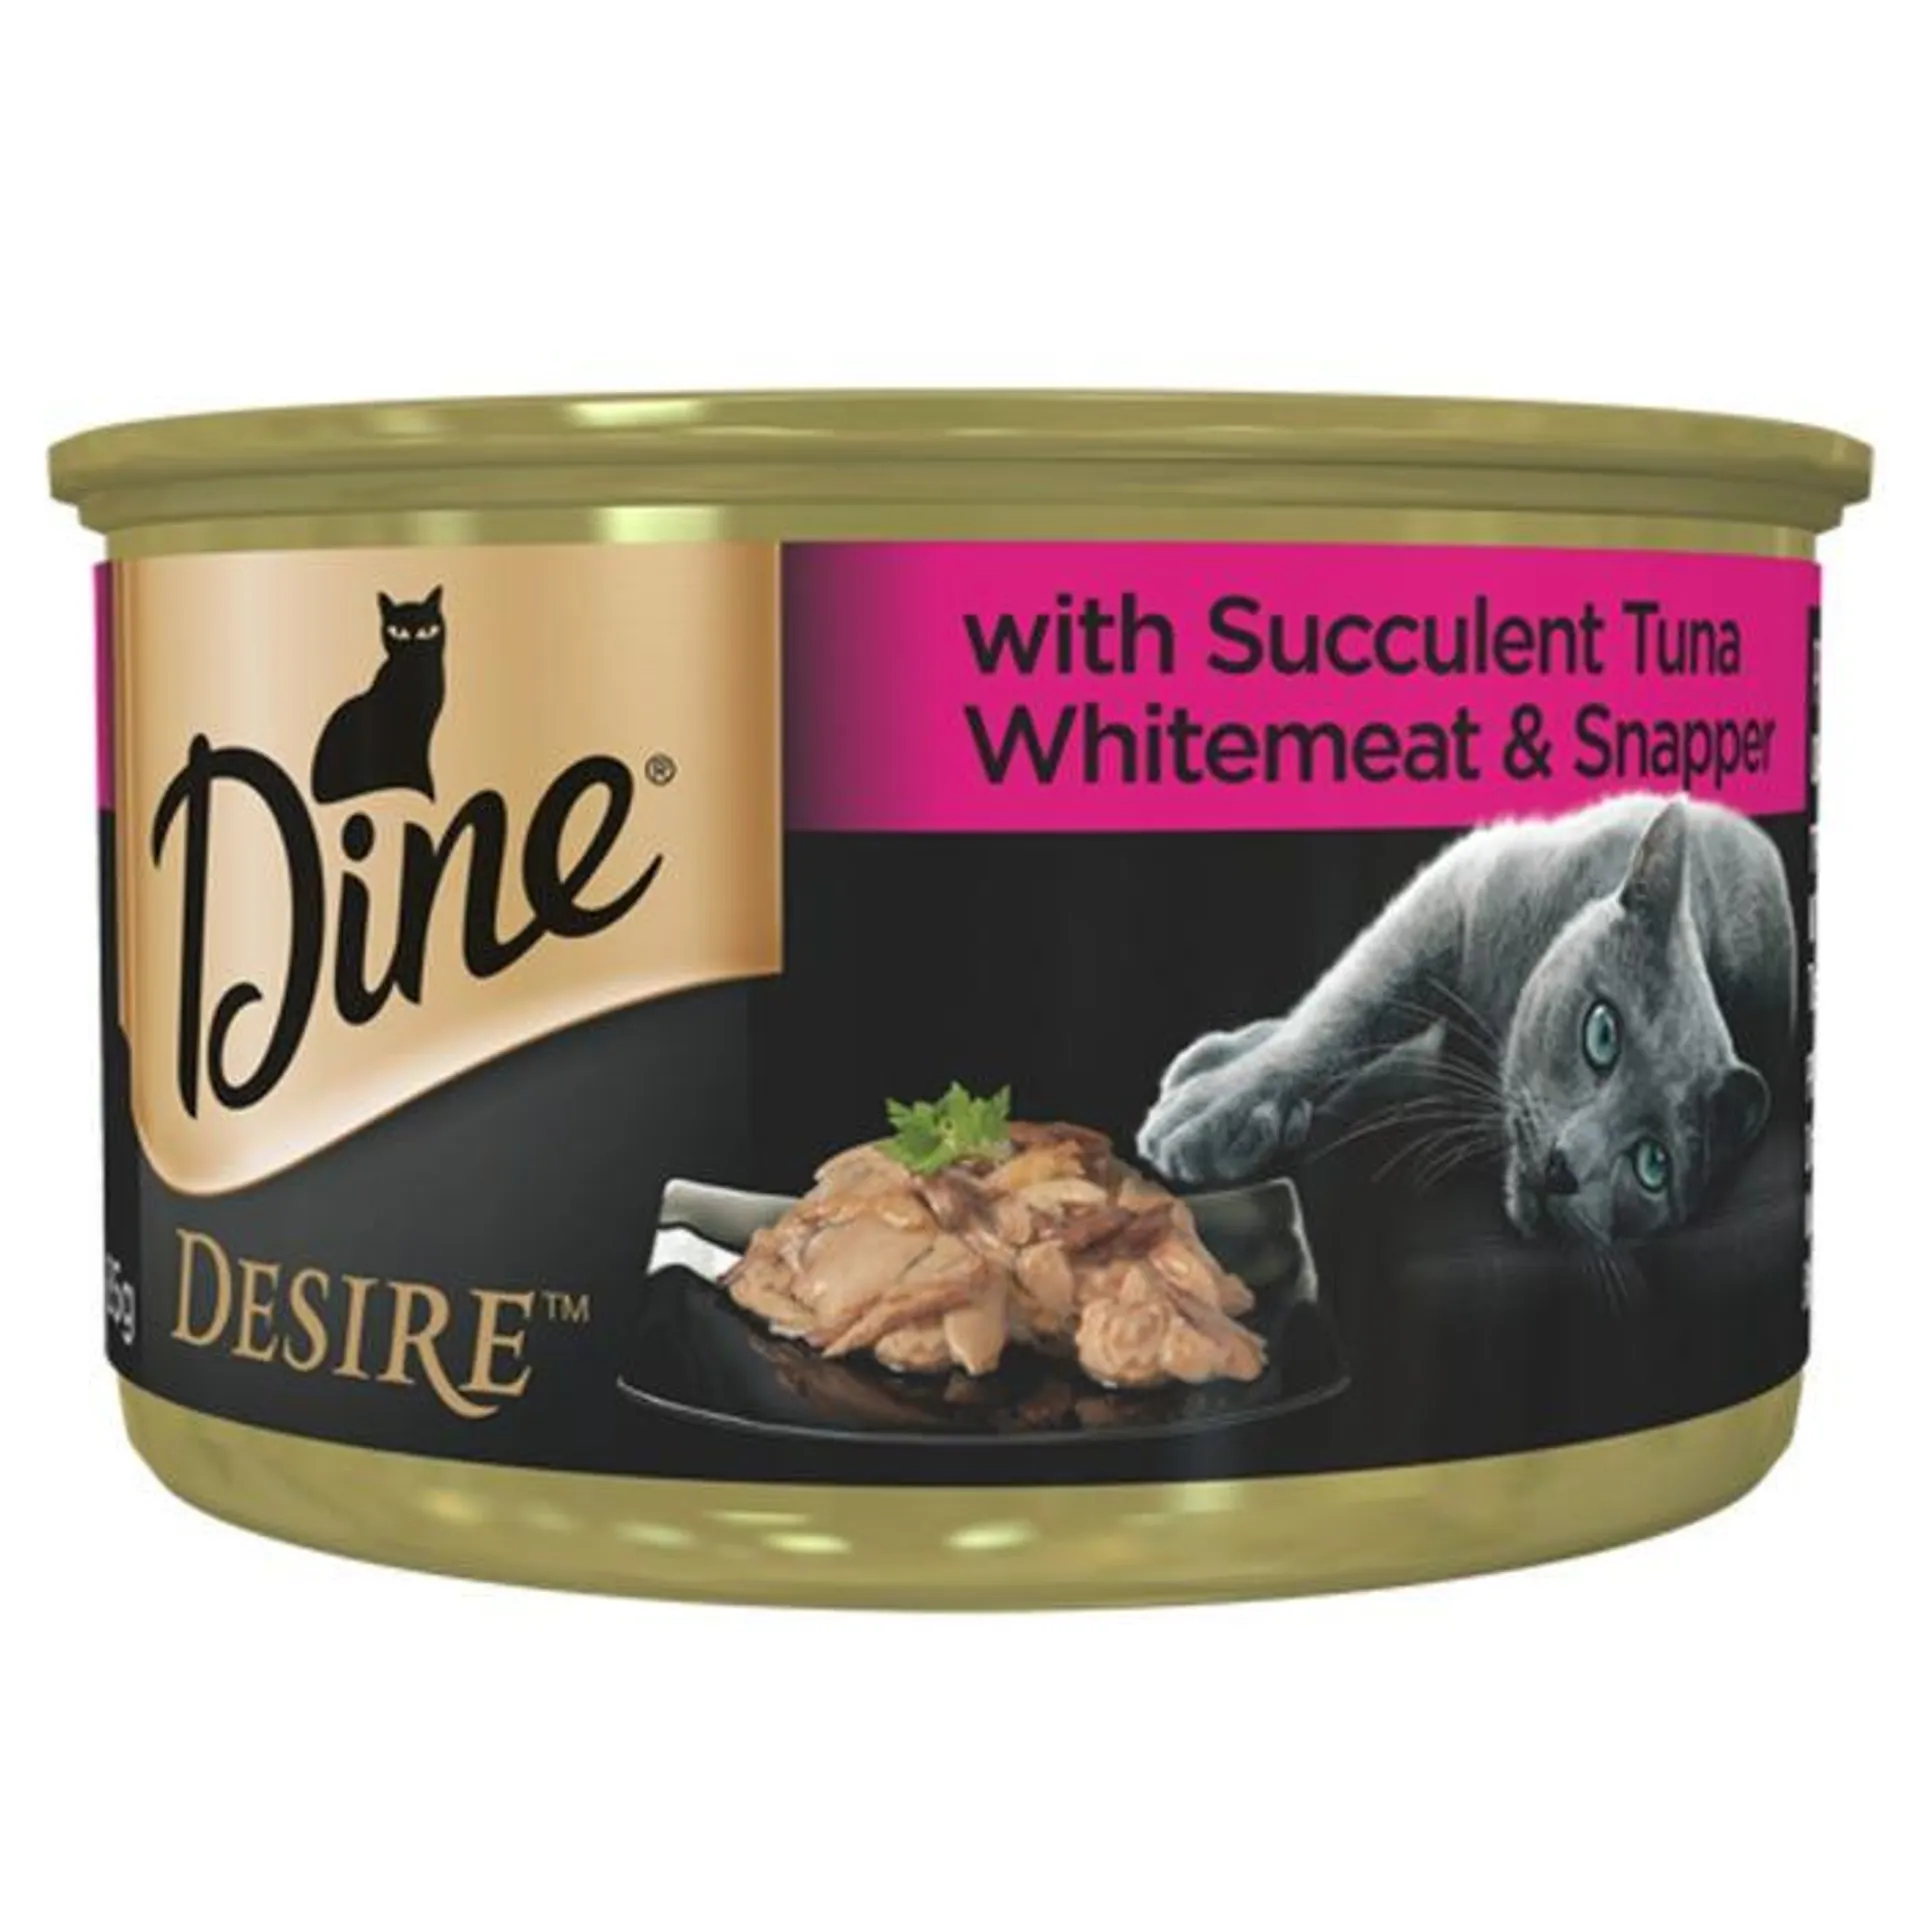 Dine Desire Succulent Tuna Whitemeat & Snapper Cat Food 85g